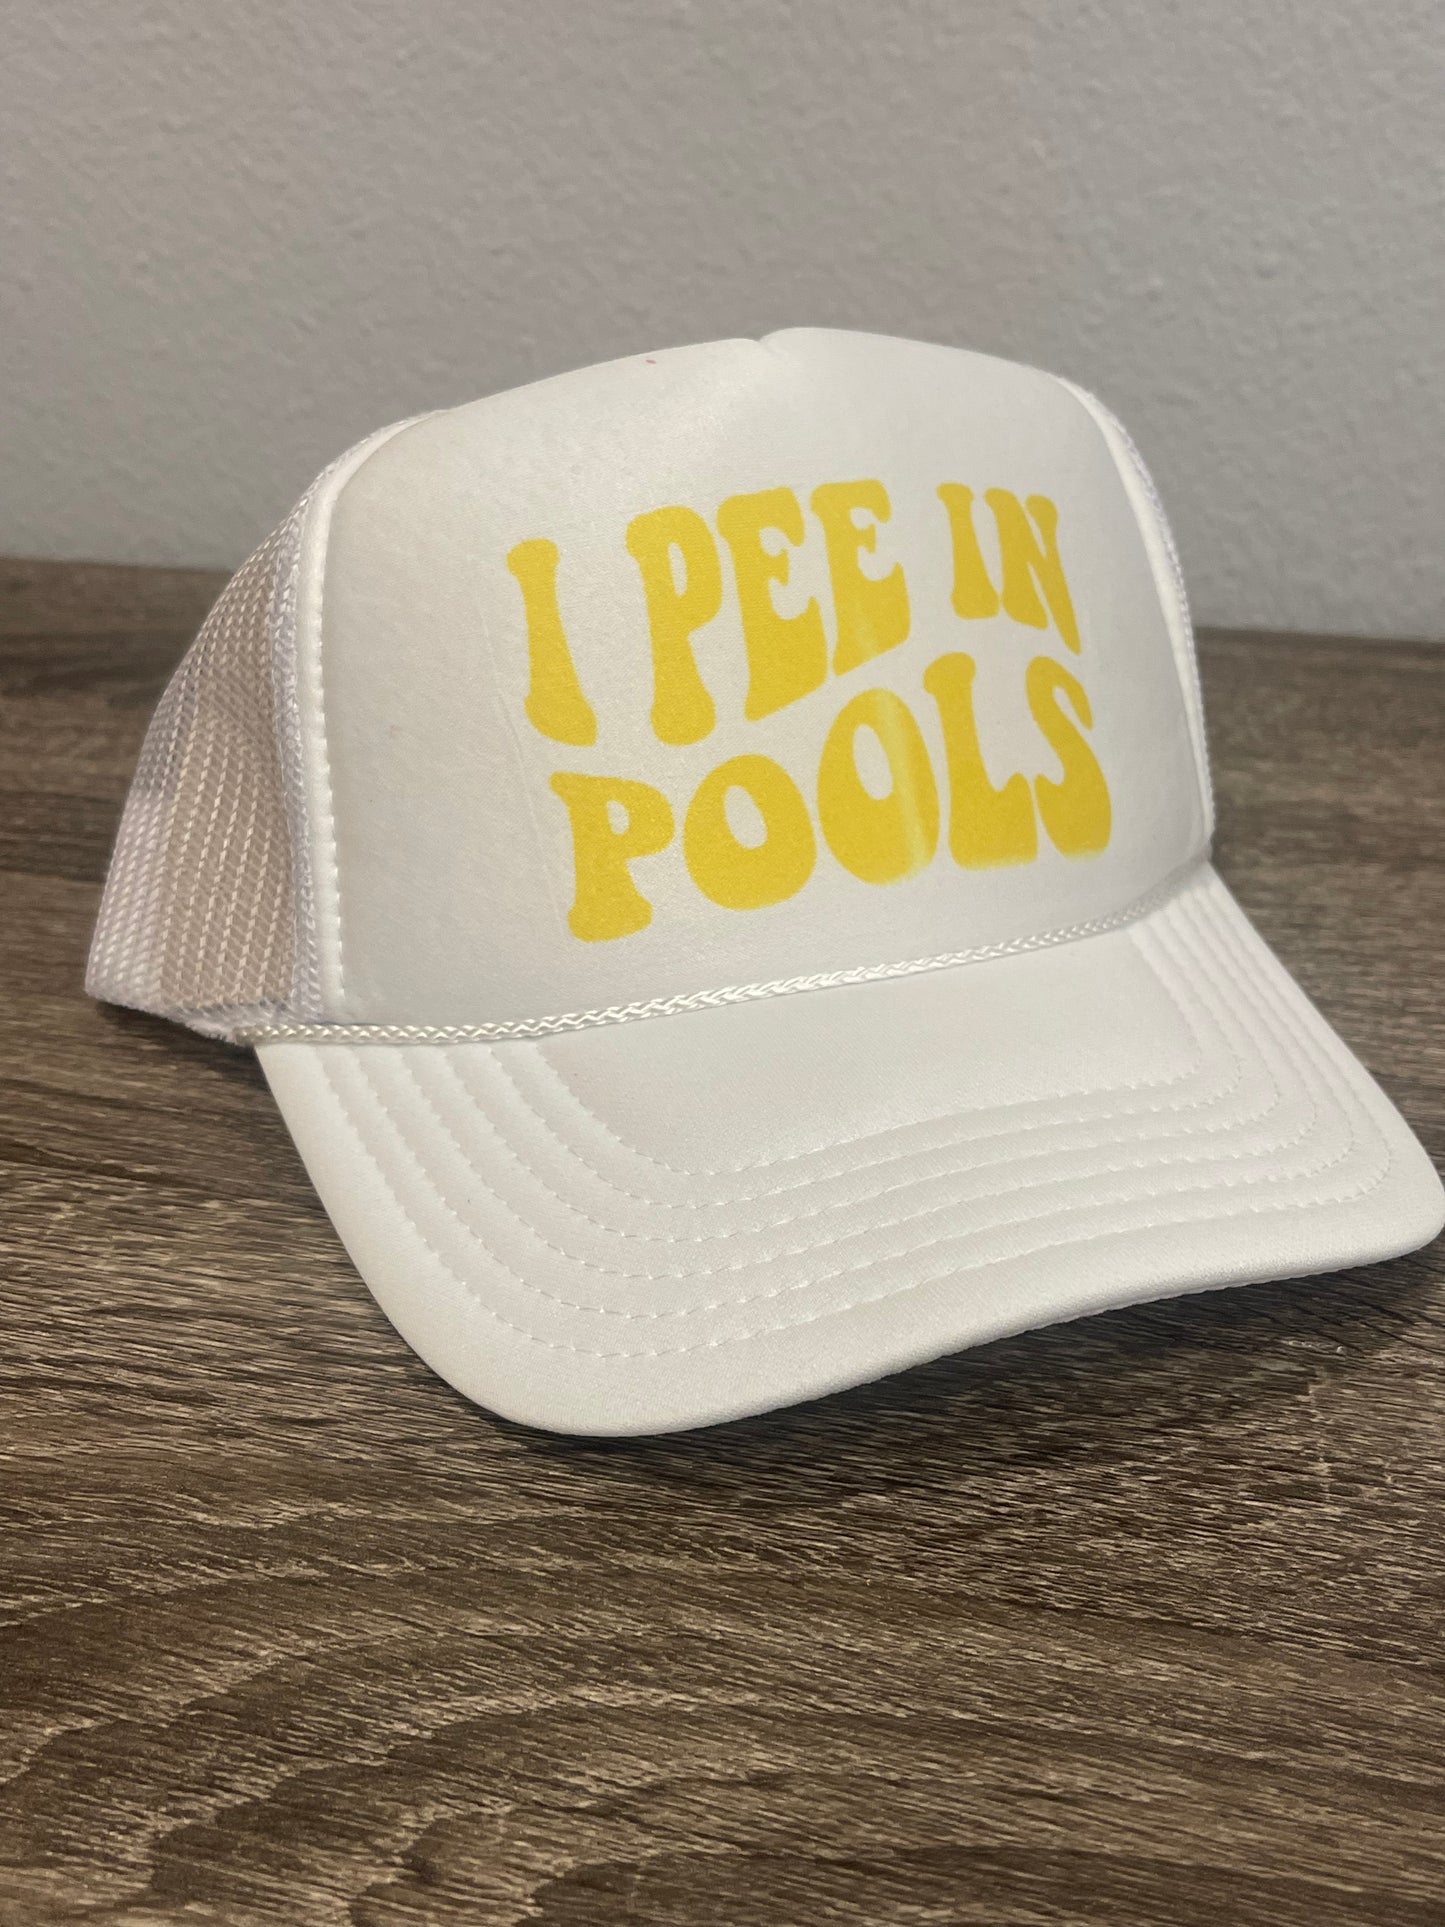 Trucker Hat- I Pee In Pools